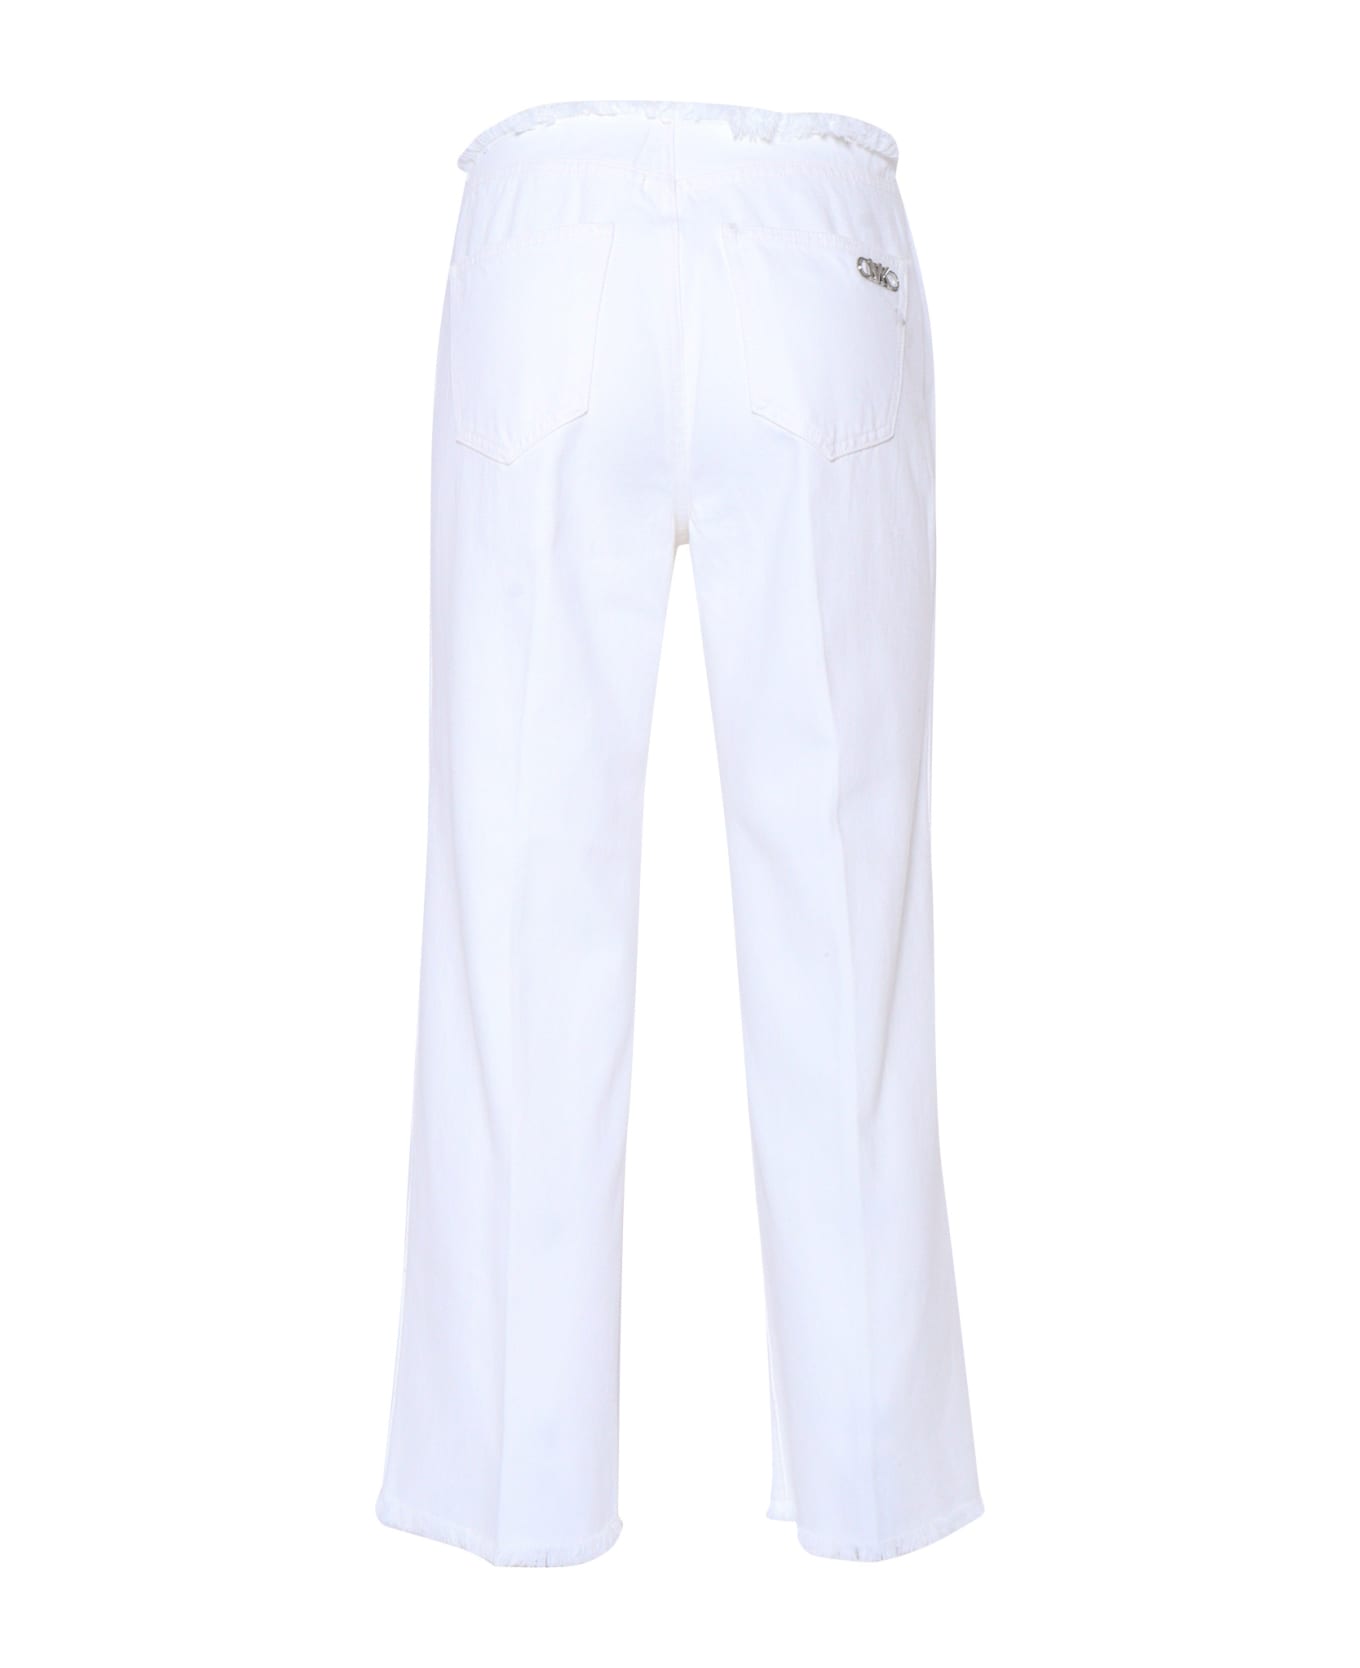 Michael Kors White Jeans - WHITE ボトムス